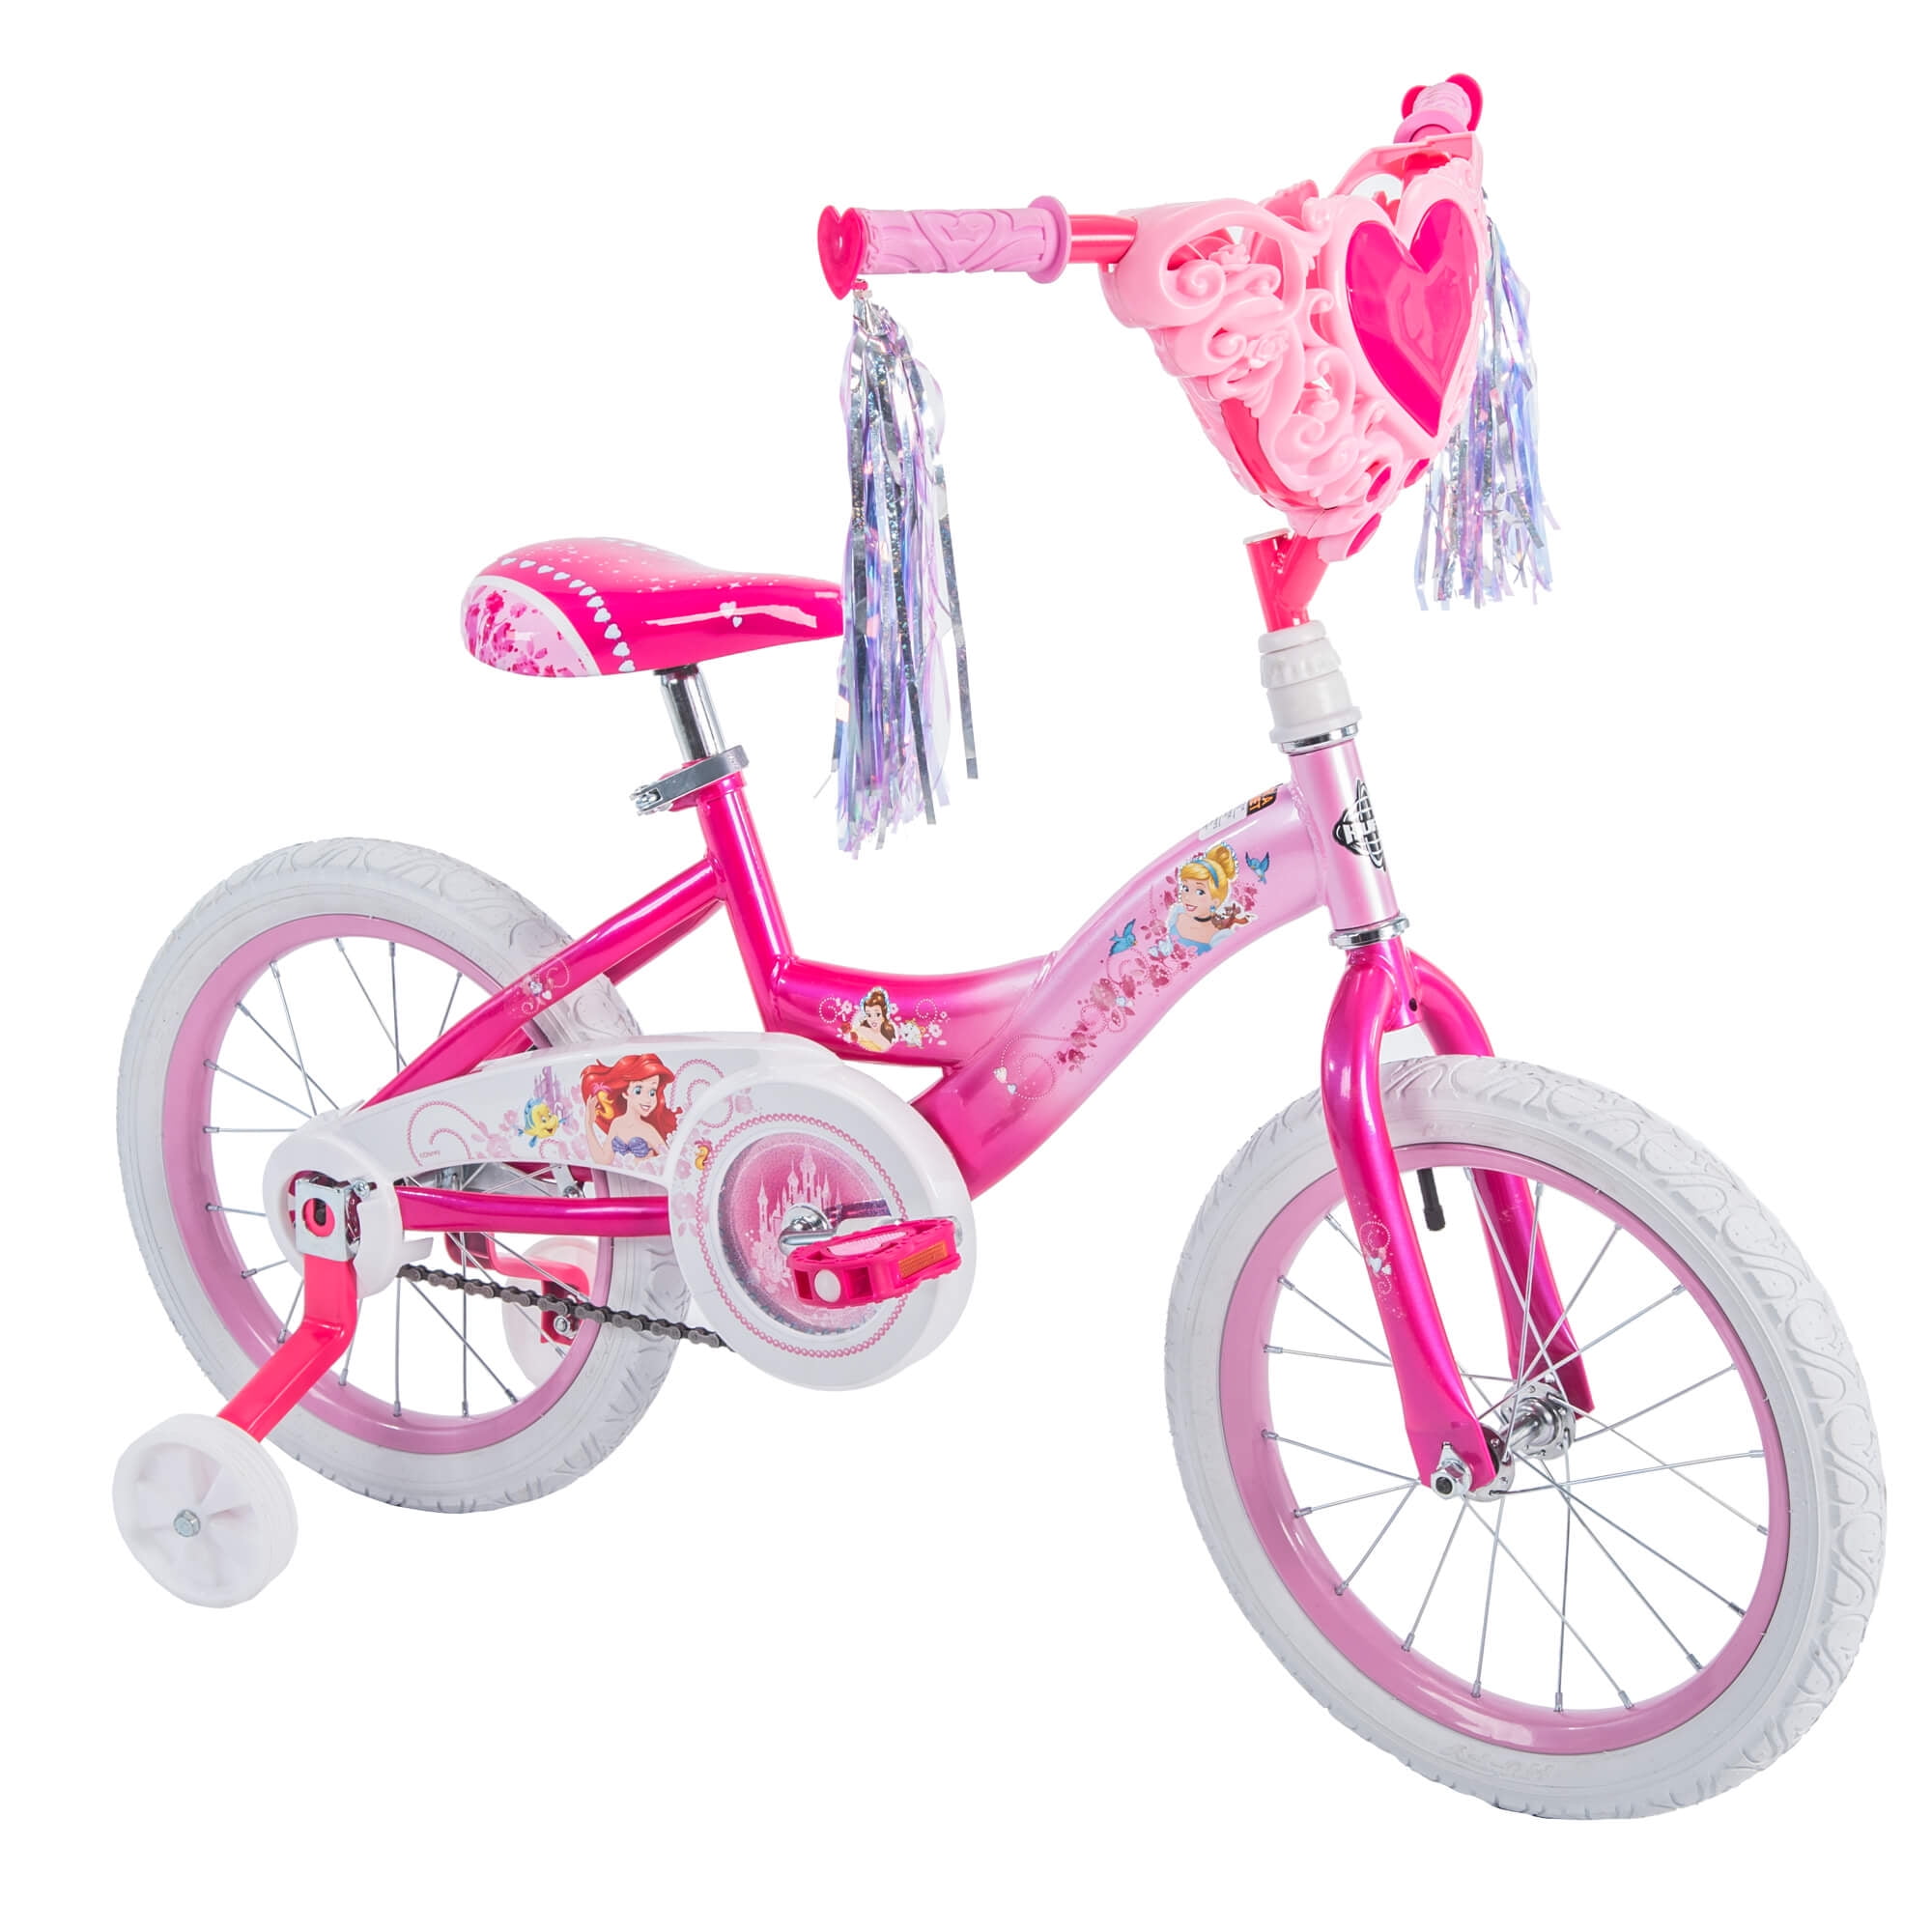 Disney Princess 16" Girls' Bike by Huffy, Pink Walmart